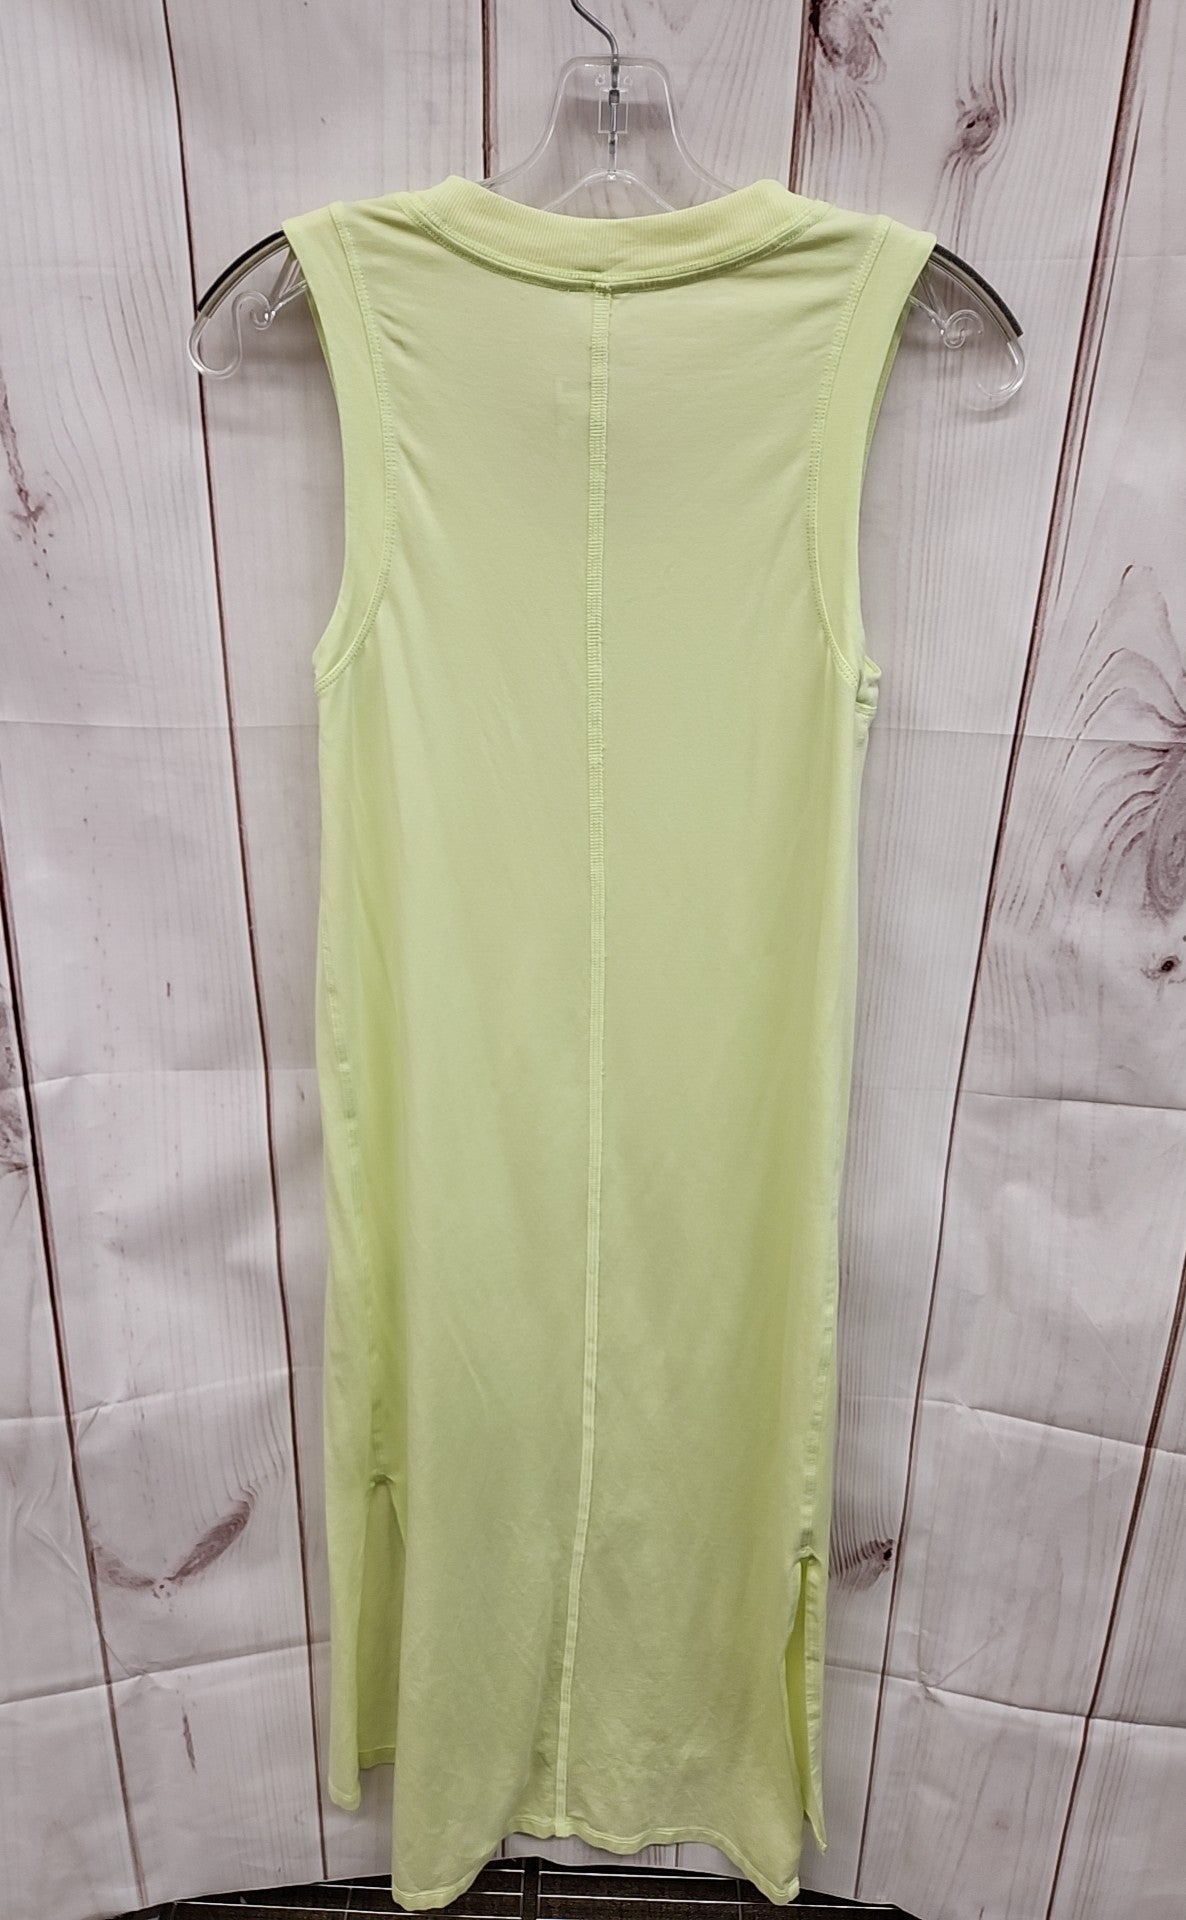 Lululemon Women's Size S Lime Green Dress